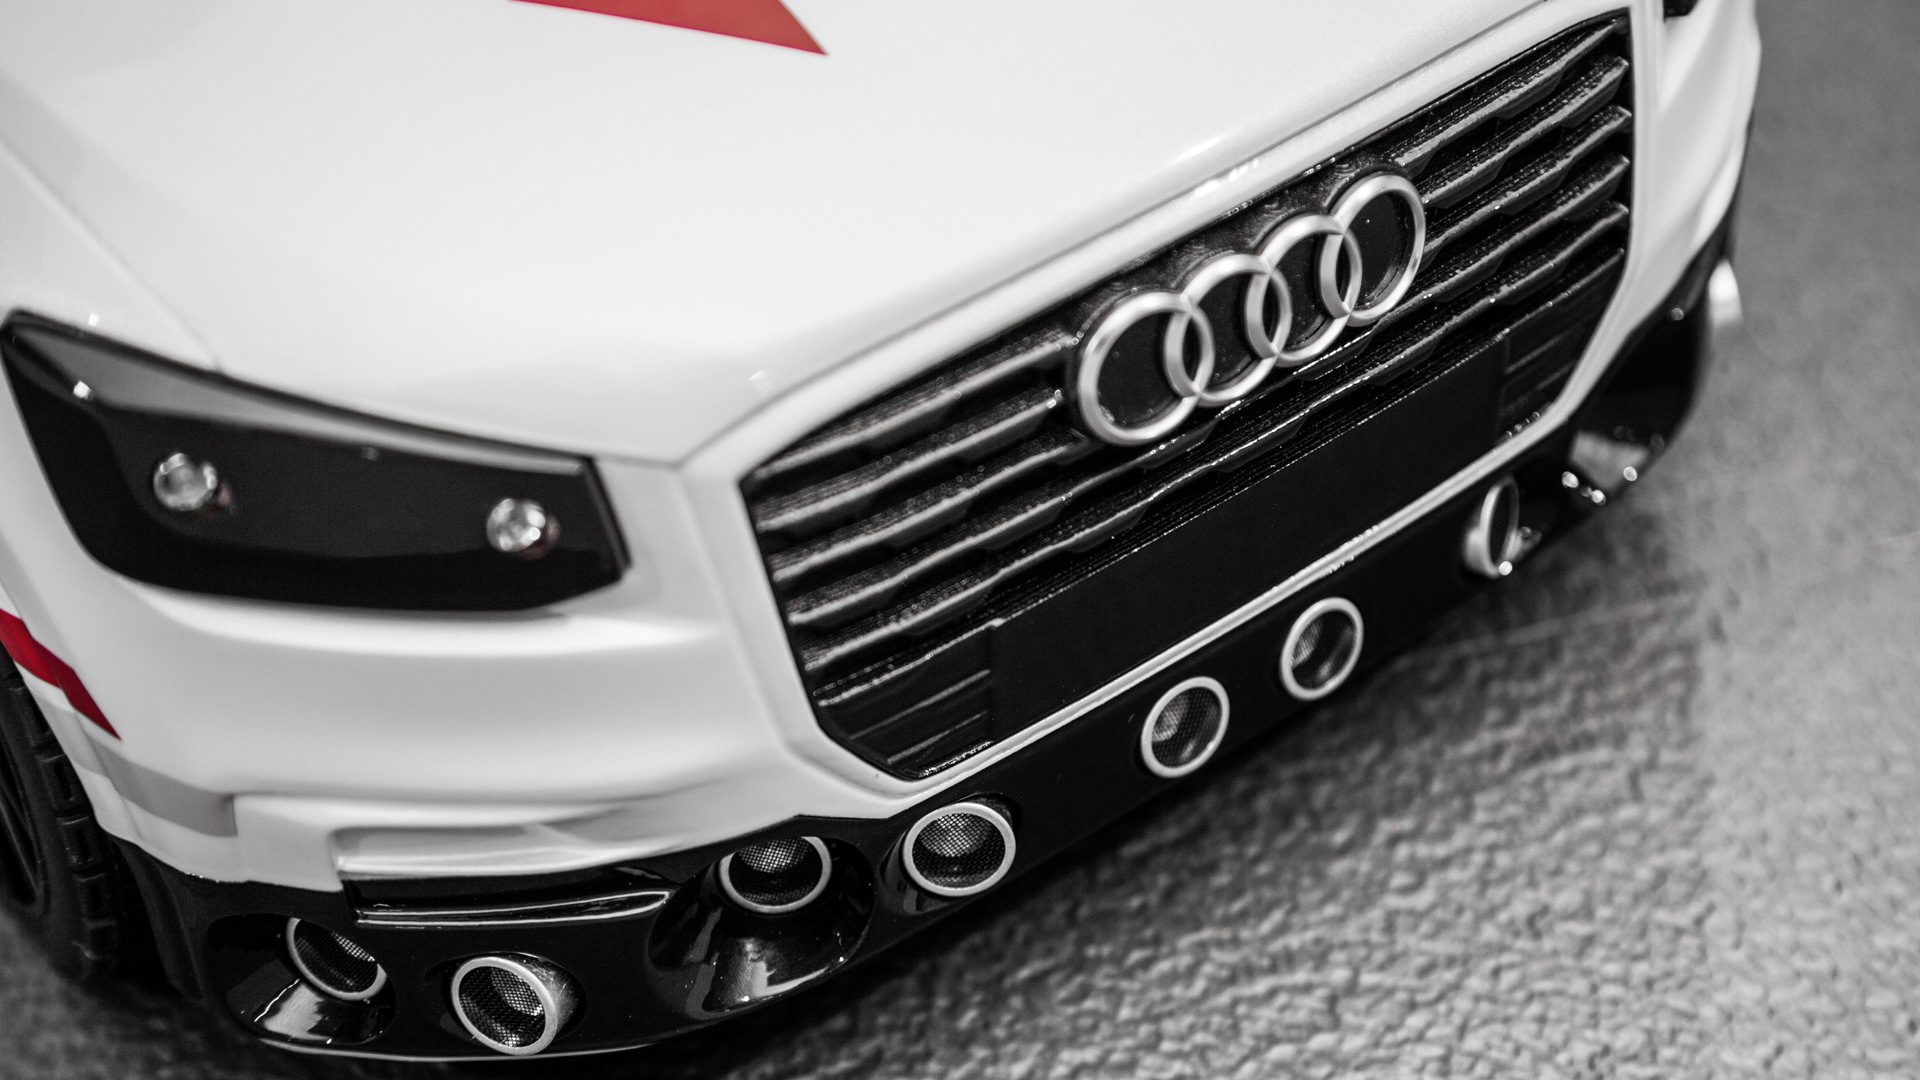 Audi Q2 Deep Learning concept